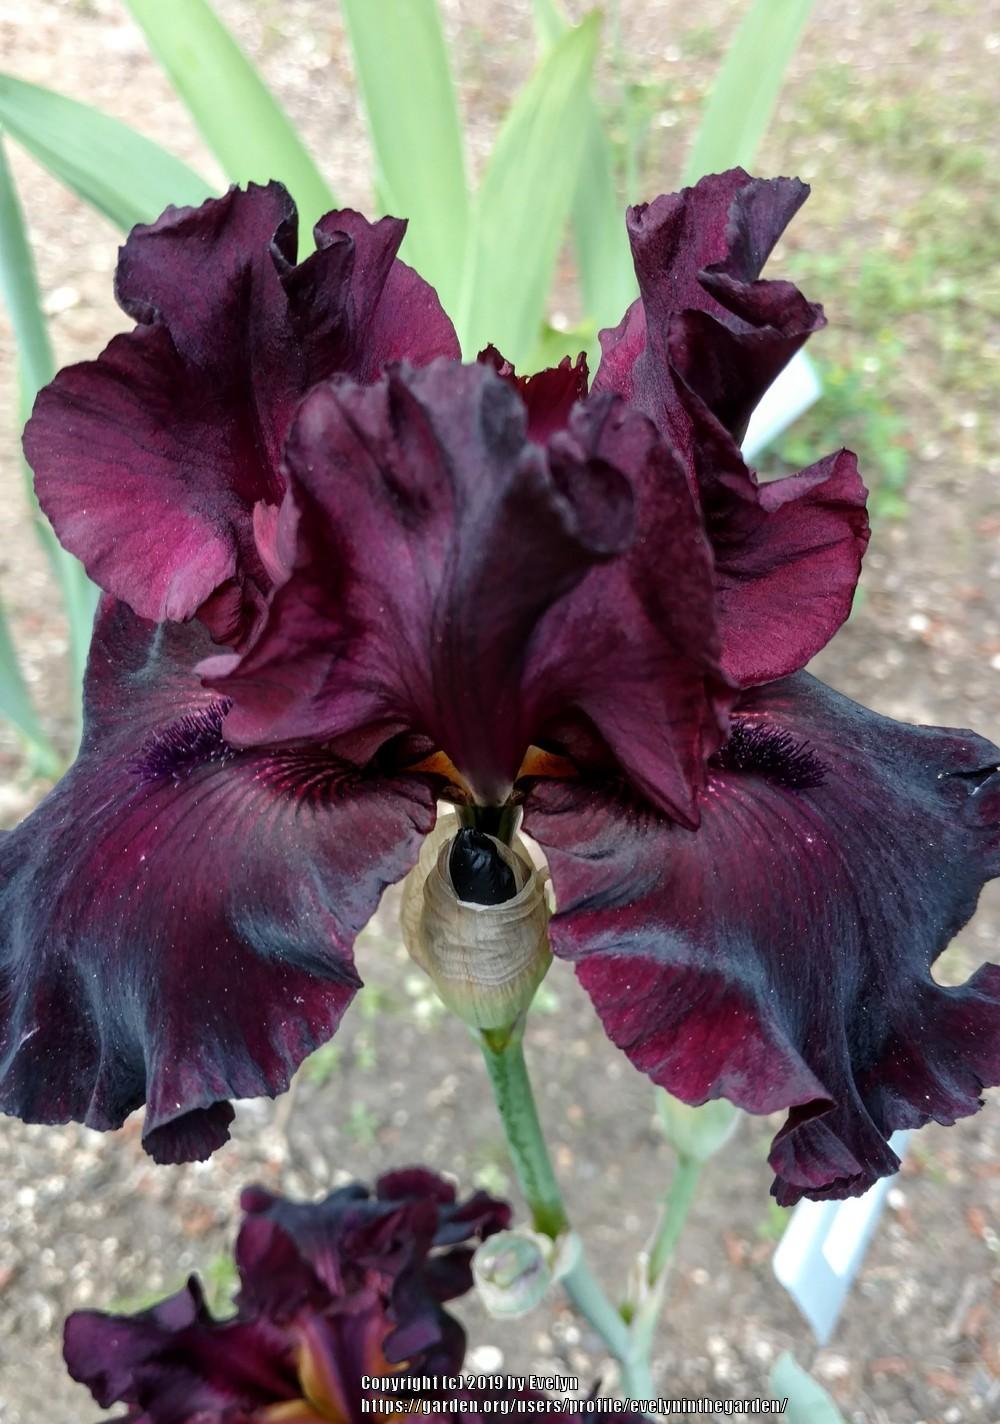 Photo of Tall Bearded Iris (Iris 'Rio Rojo') uploaded by evelyninthegarden